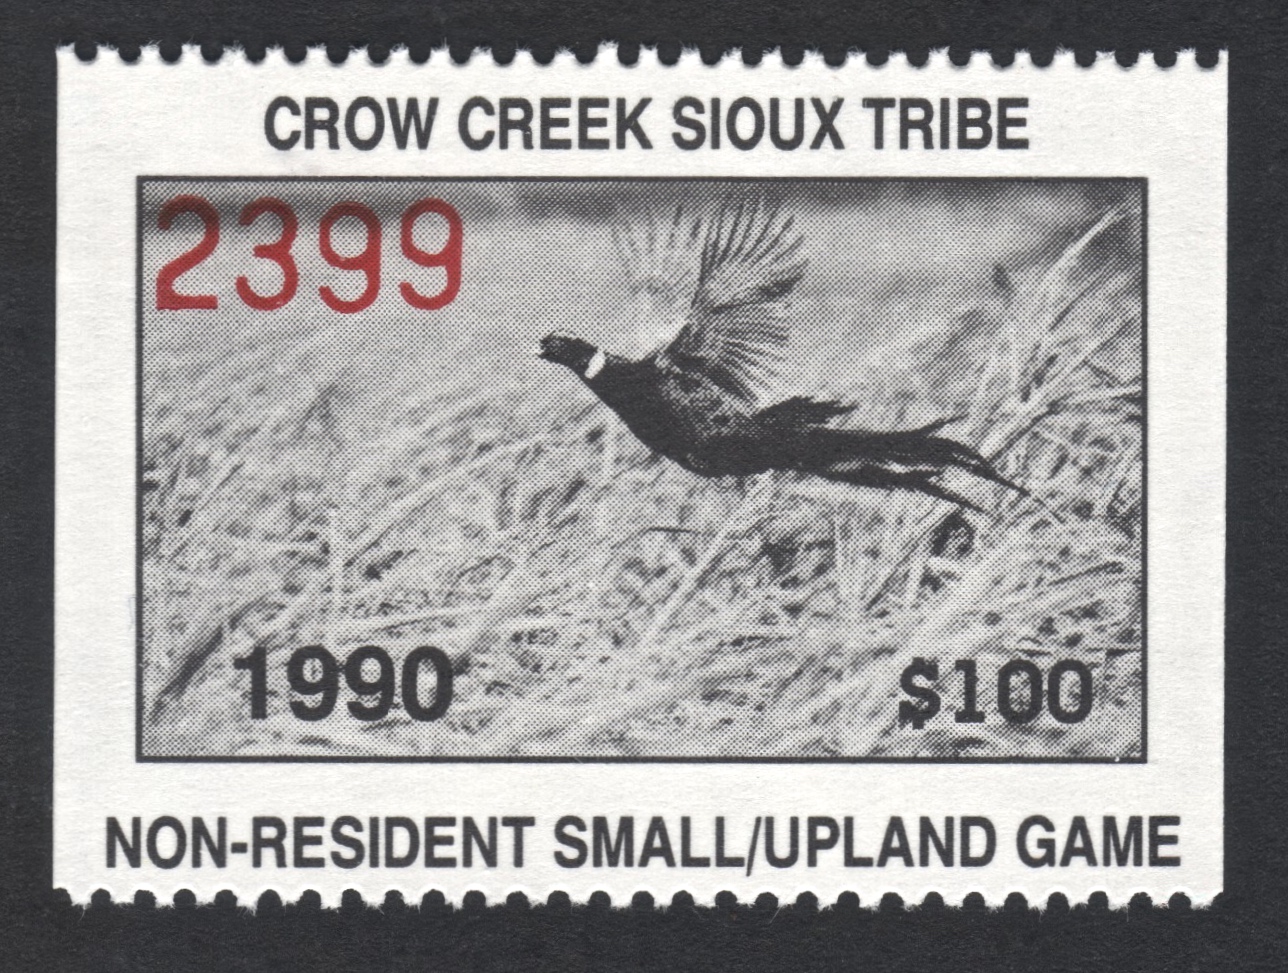 1990 Crow Creek NR Small/Upland Game